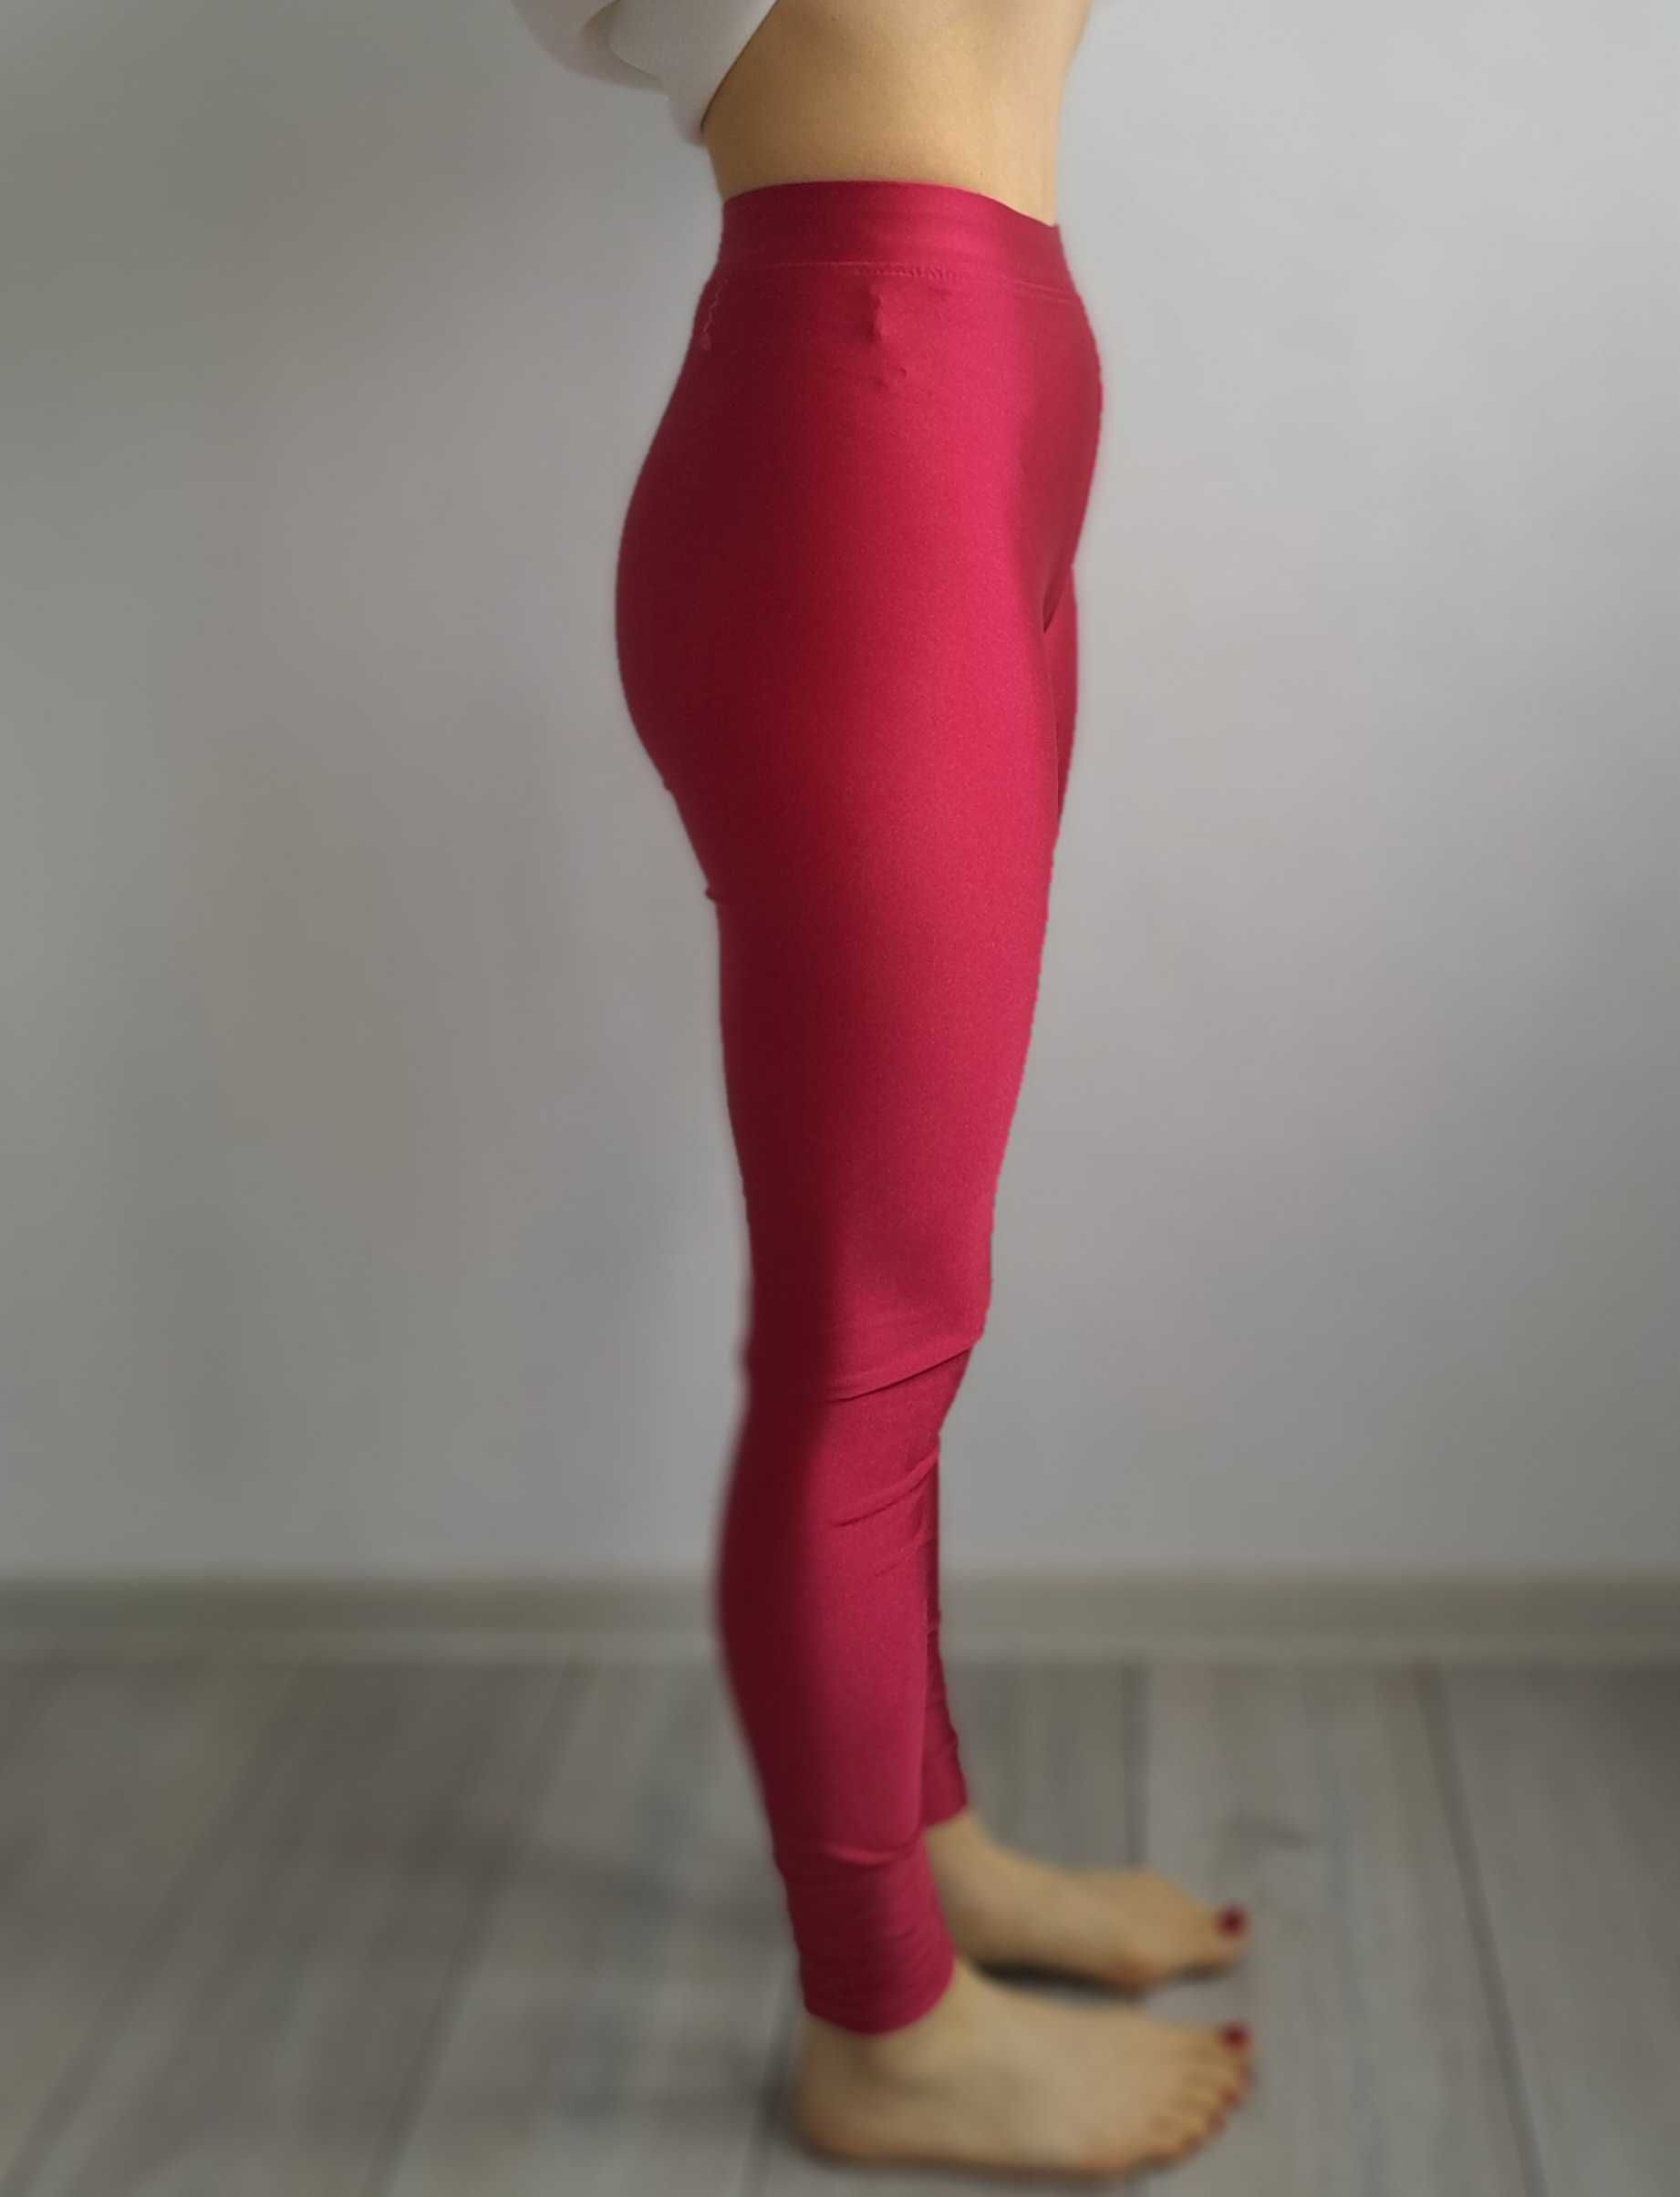 Compleu bluza si/sau pantaloni rosii ( impreuna sau separat )